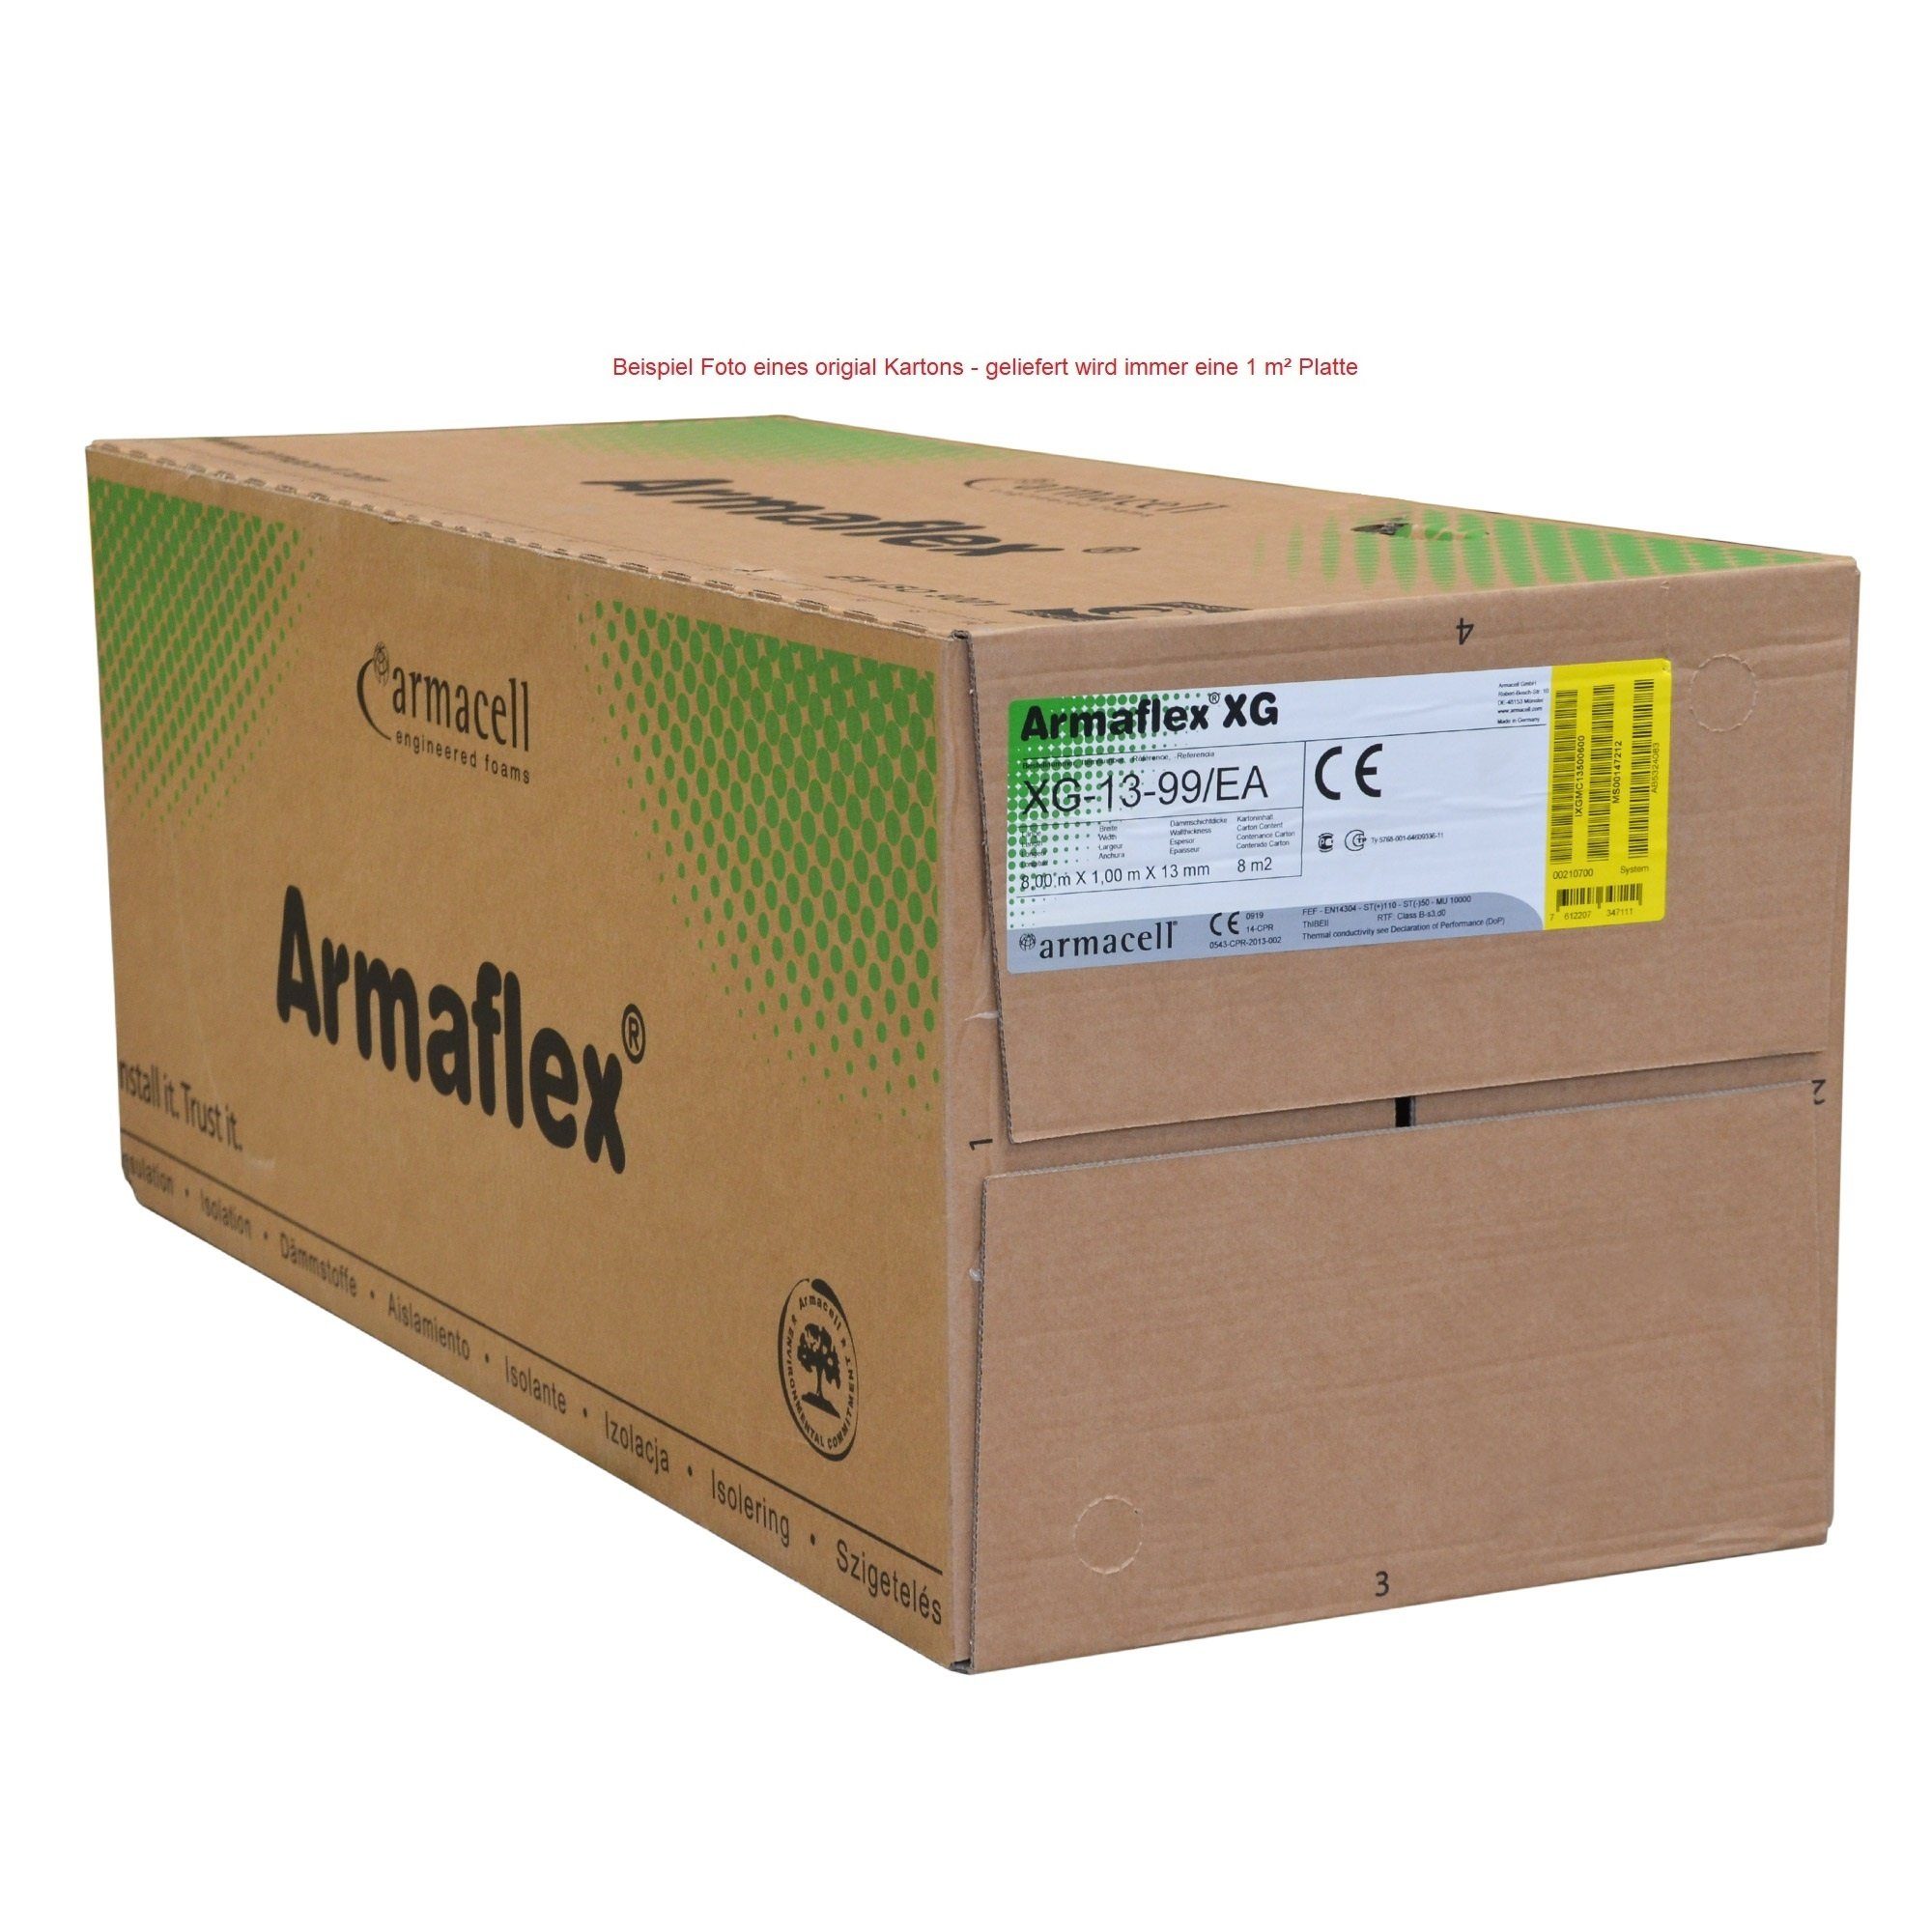 Armacell® Kautschuk XG Armaflex selbstklebend Scorprotect® Zuschnitt 1m² Rollladenkastendämmung original